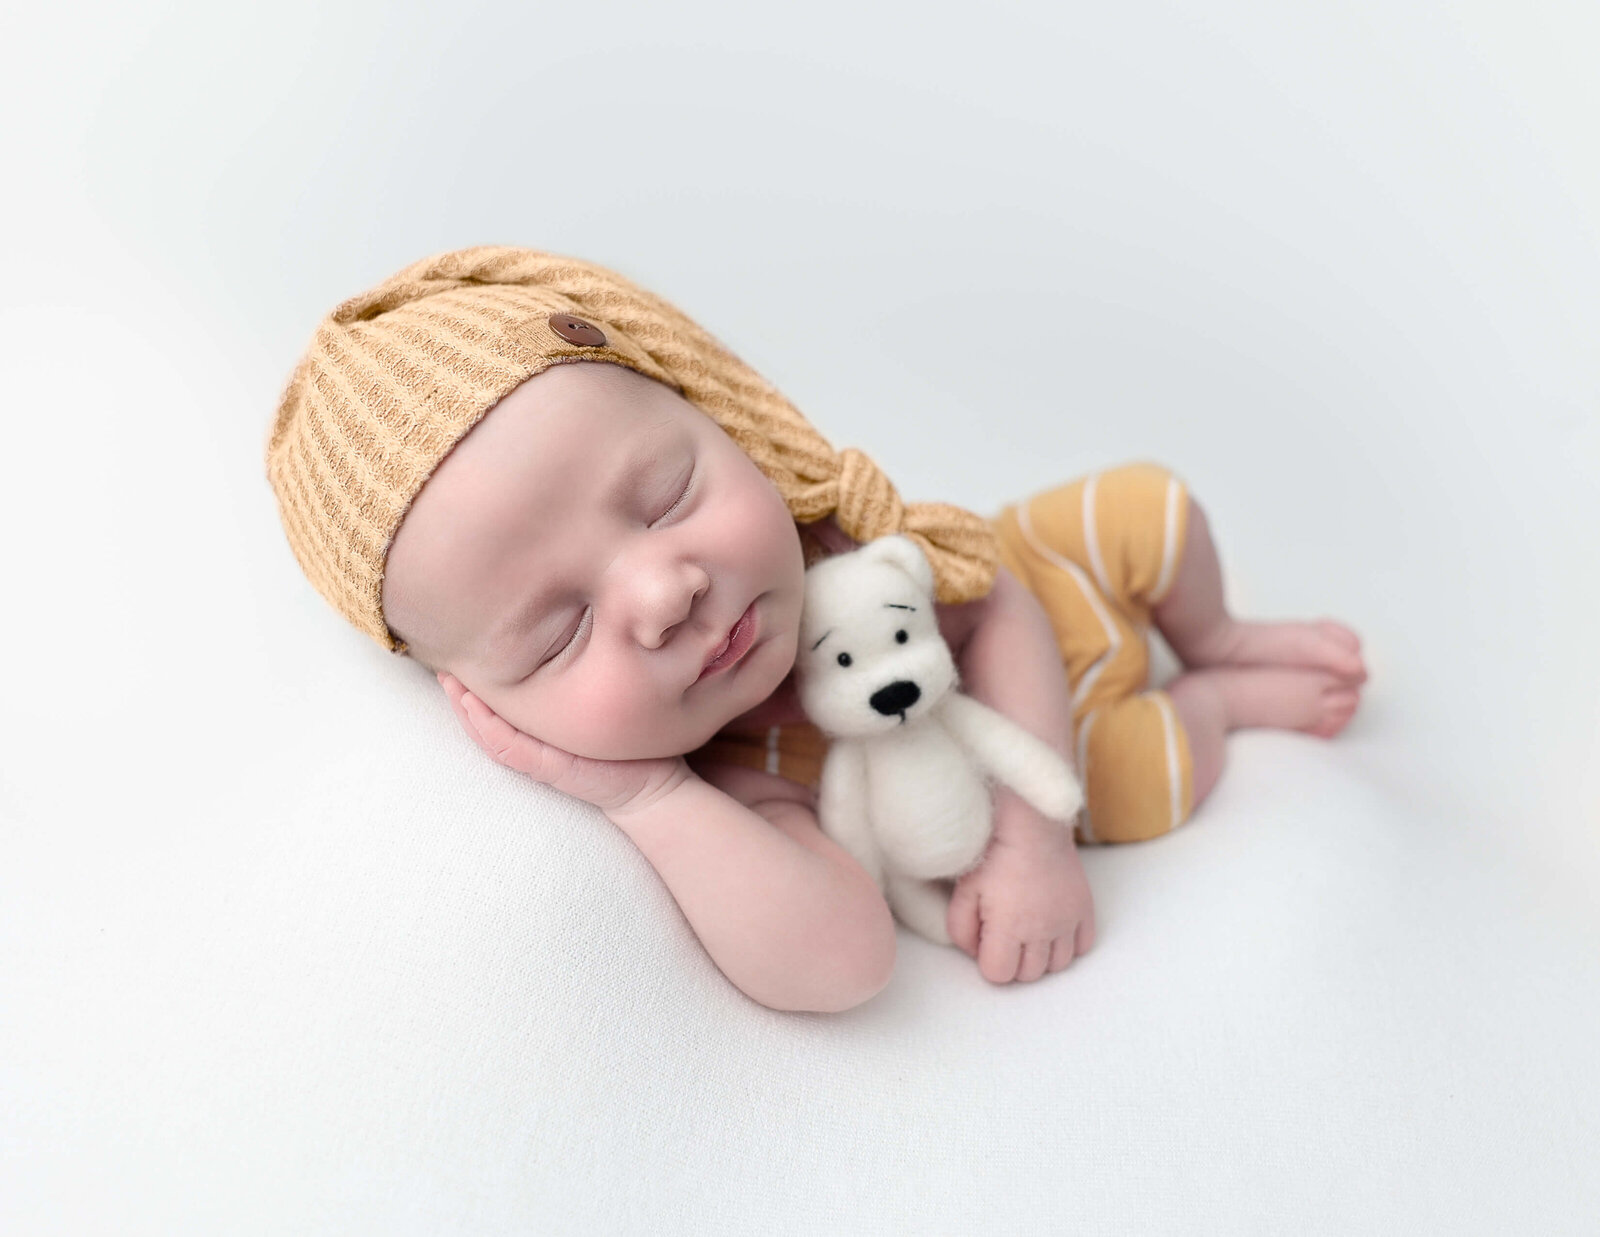 Baby boy holding a teddy bear, Rochester, Ny.